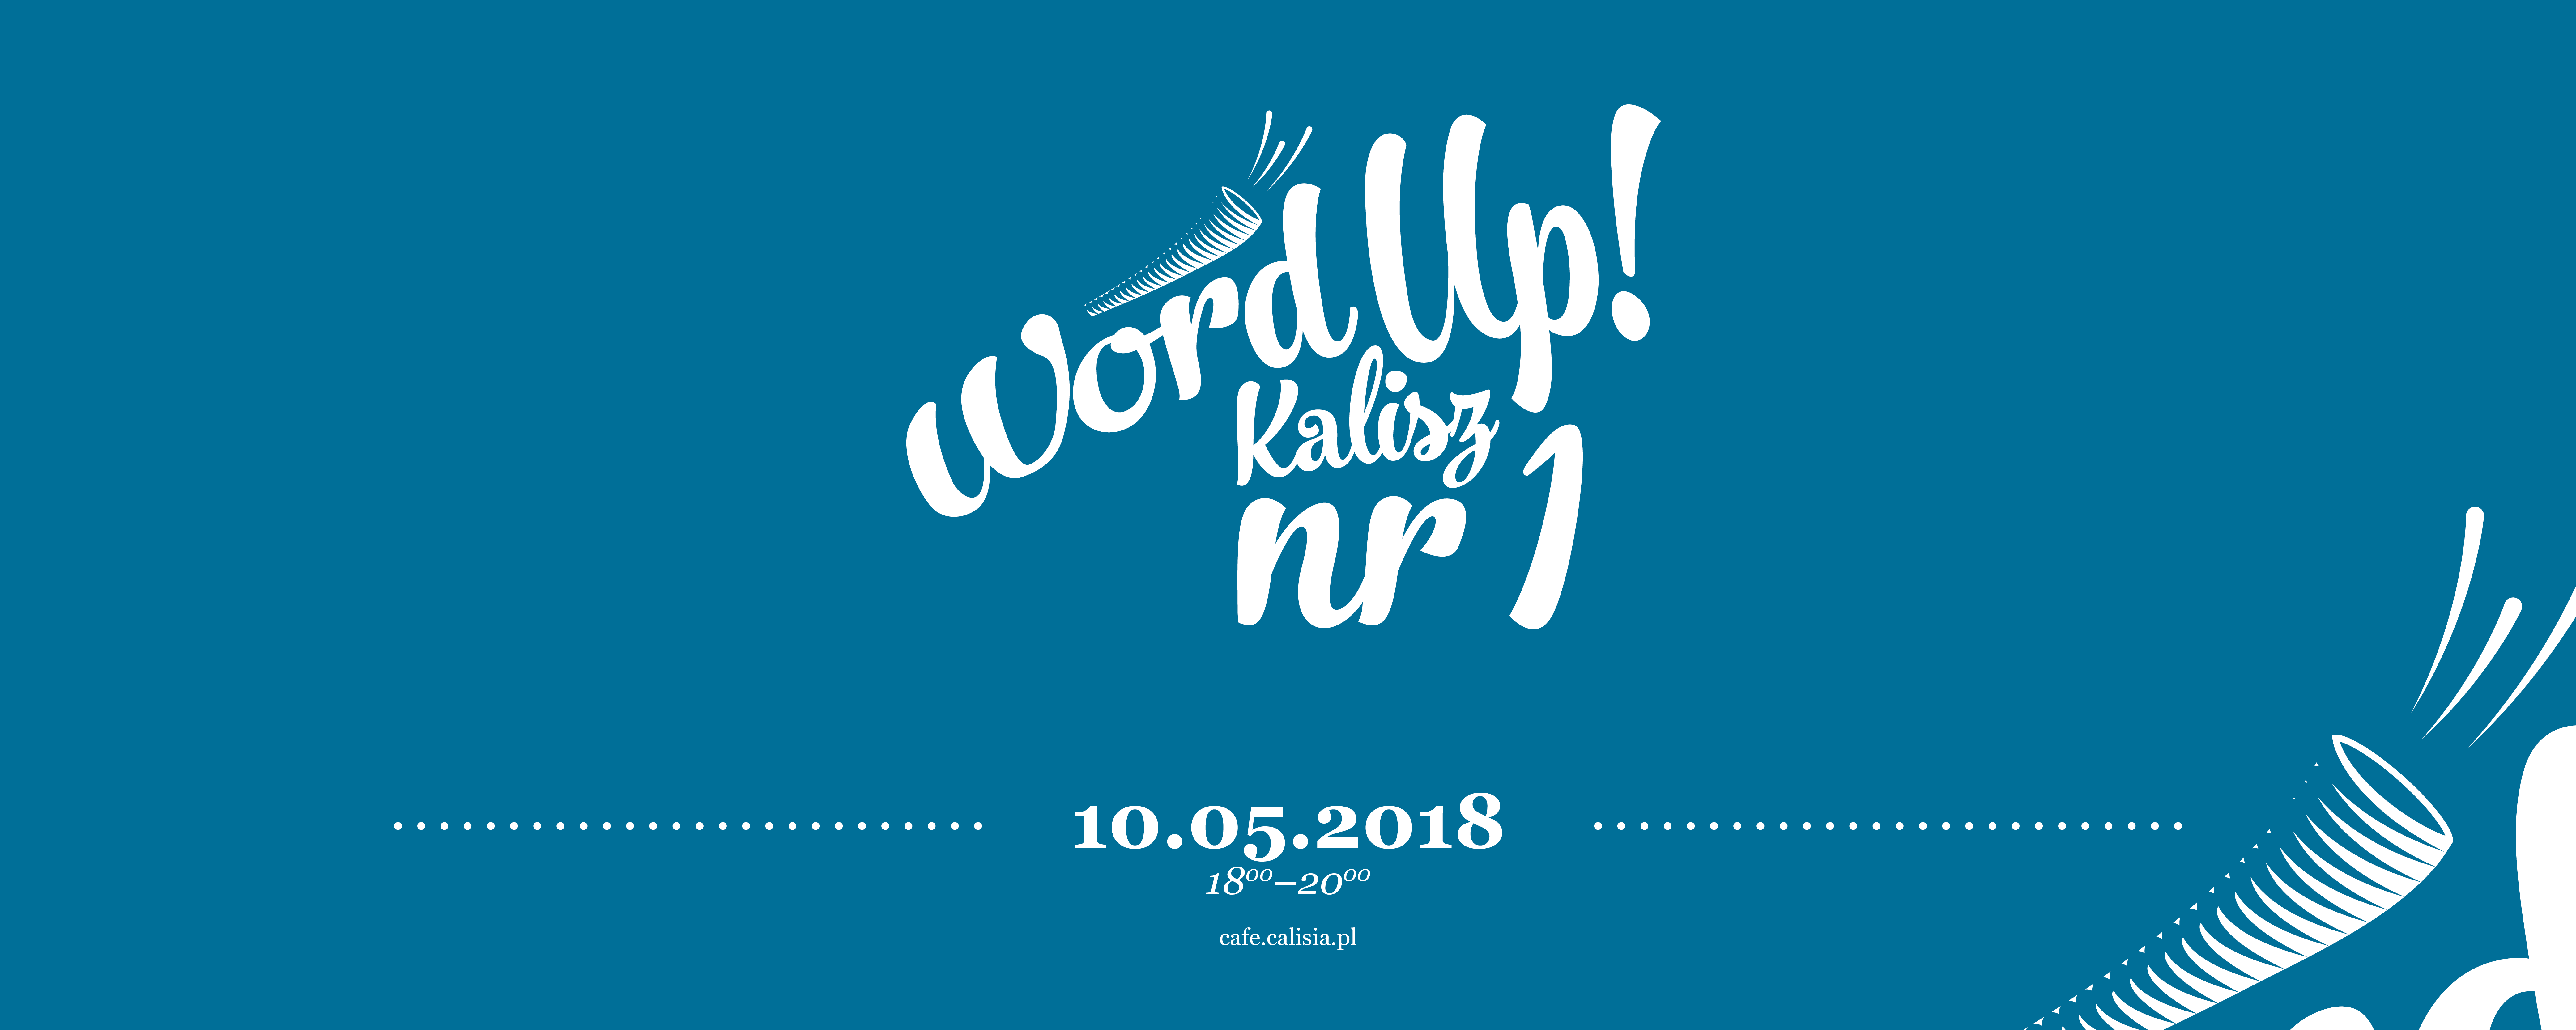 wordup-kalisz-1